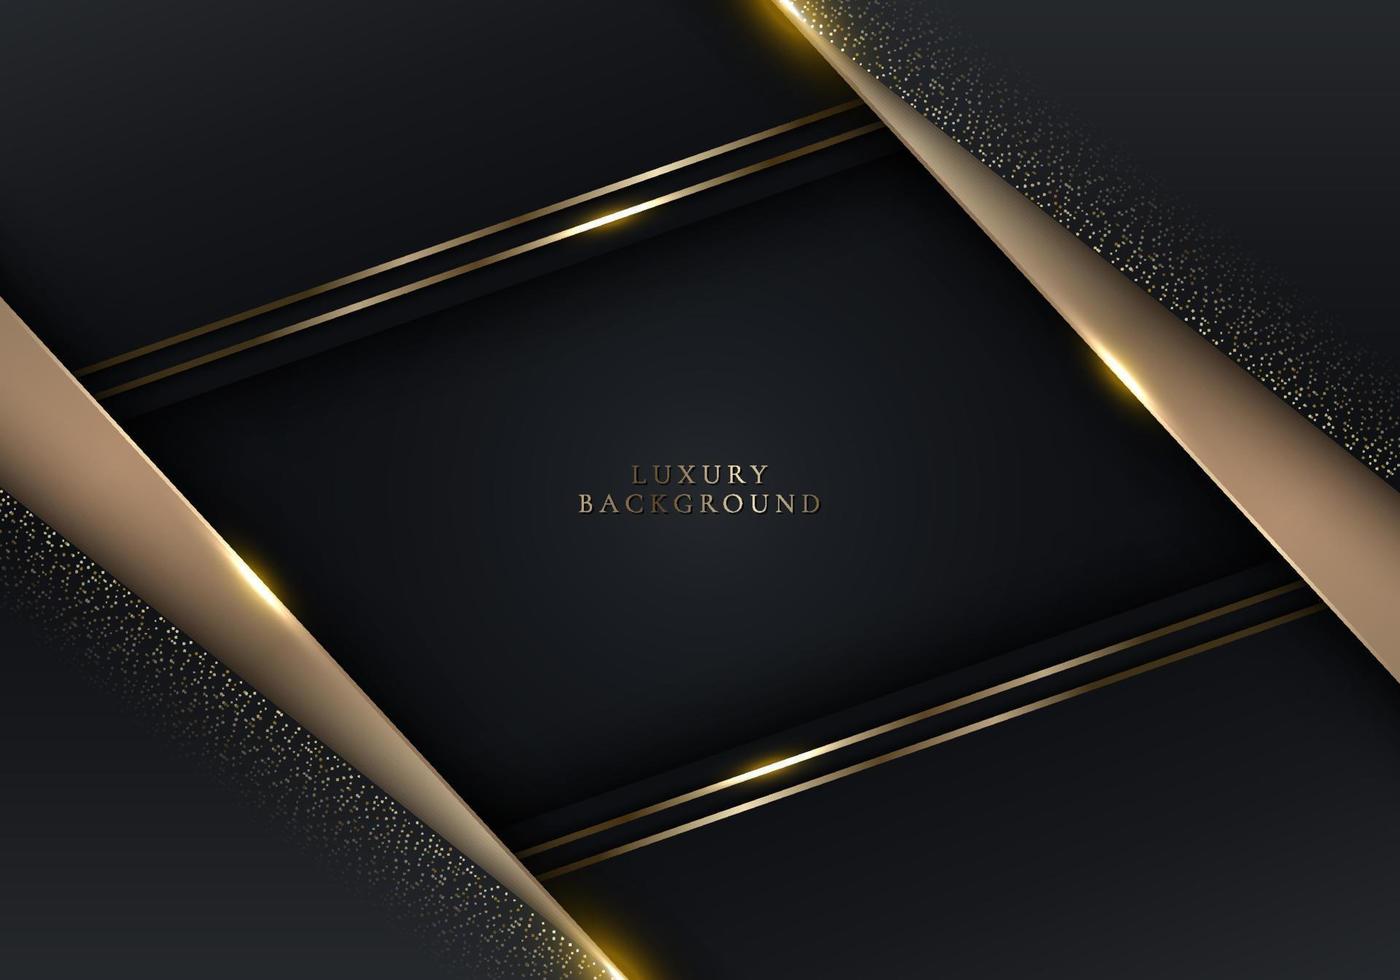 3D modern luxury template design black and gold stripes with golden glitter line light sparking on dark background vector